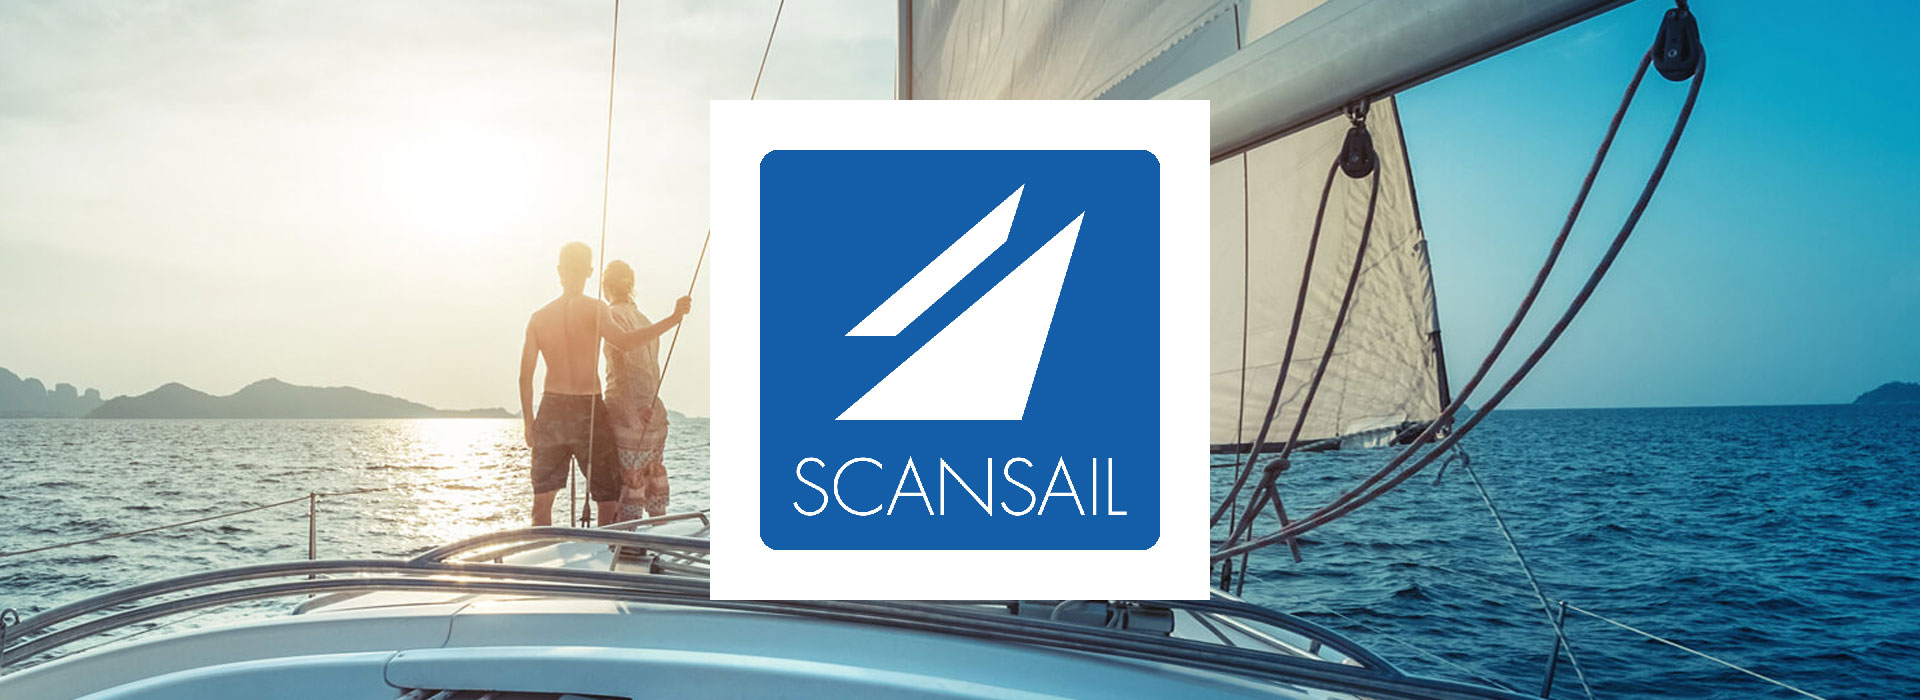 scansail yachts international gmbh